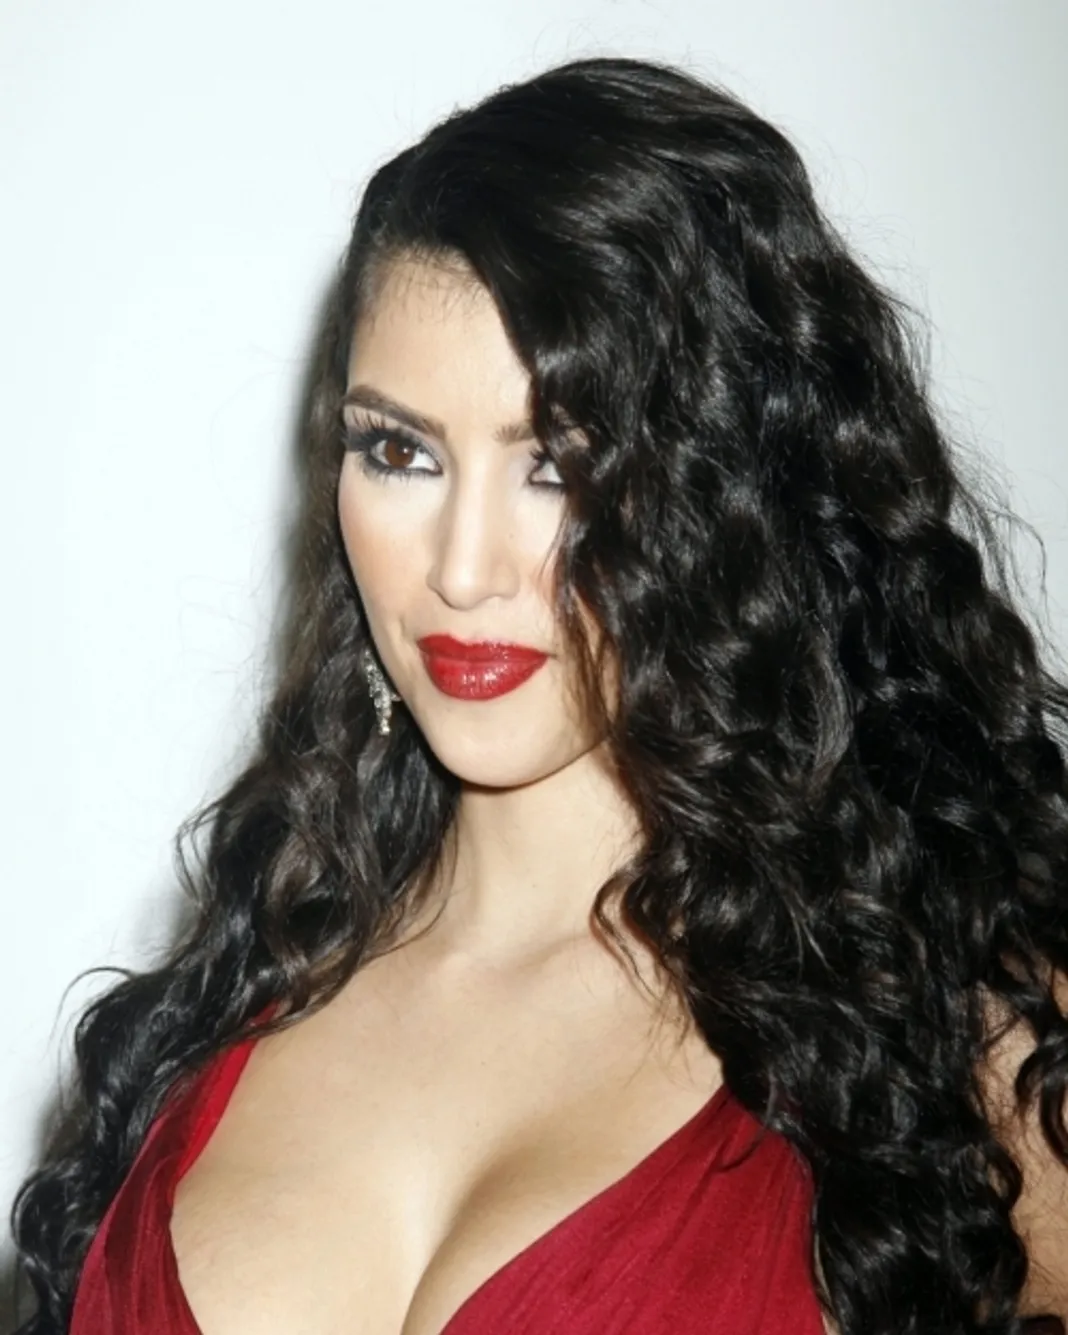 bradley taft recommends Kim Kardashian Playboy Porn